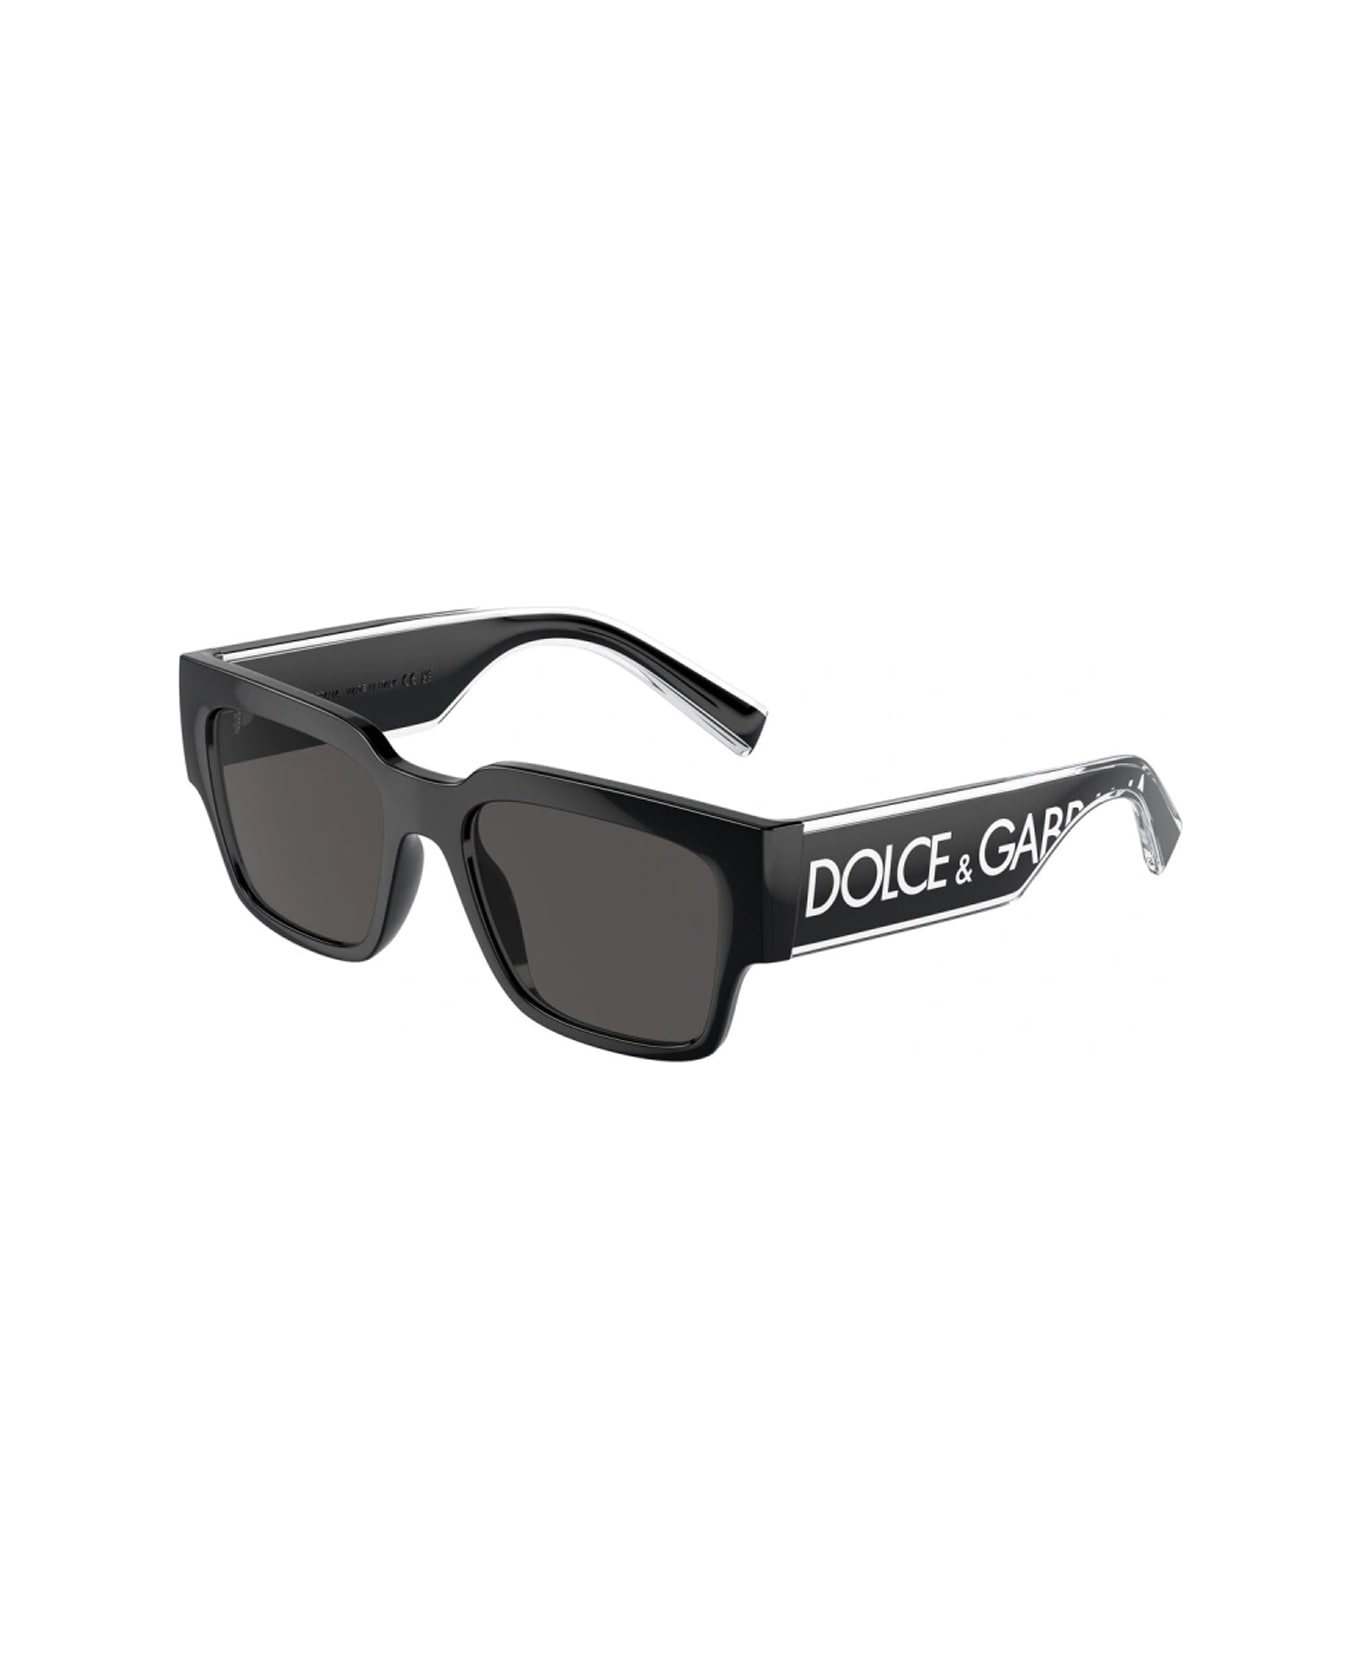 Dolce & Gabbana Eyewear Dg6184 501/87 Sunglasses - Nero